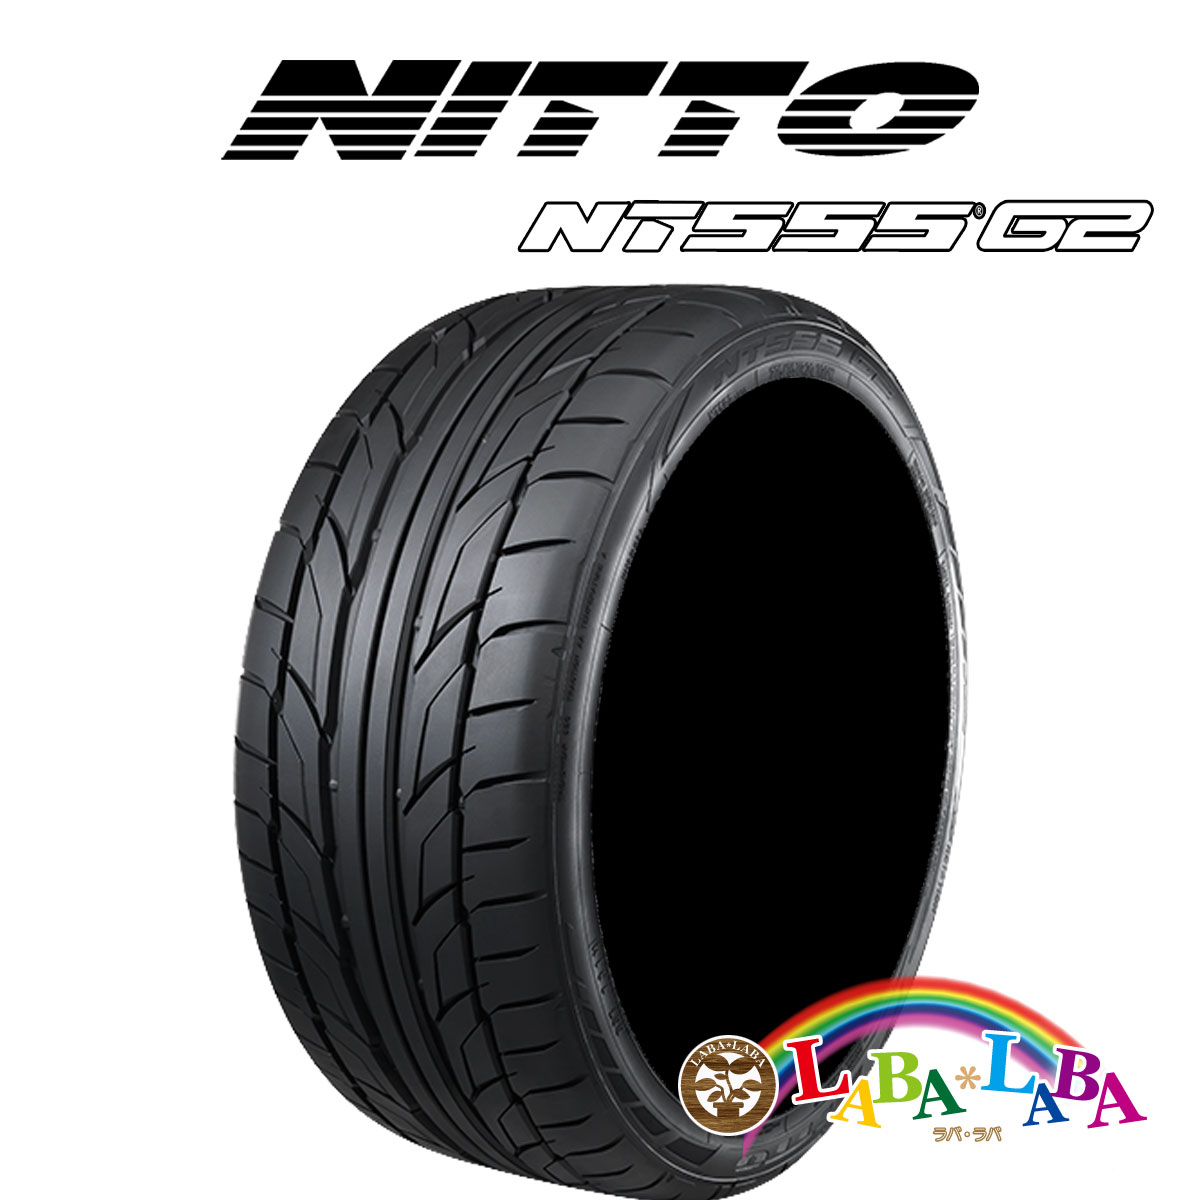 NITTO NT555 G2 275/40R19 105W XL サマータイヤ